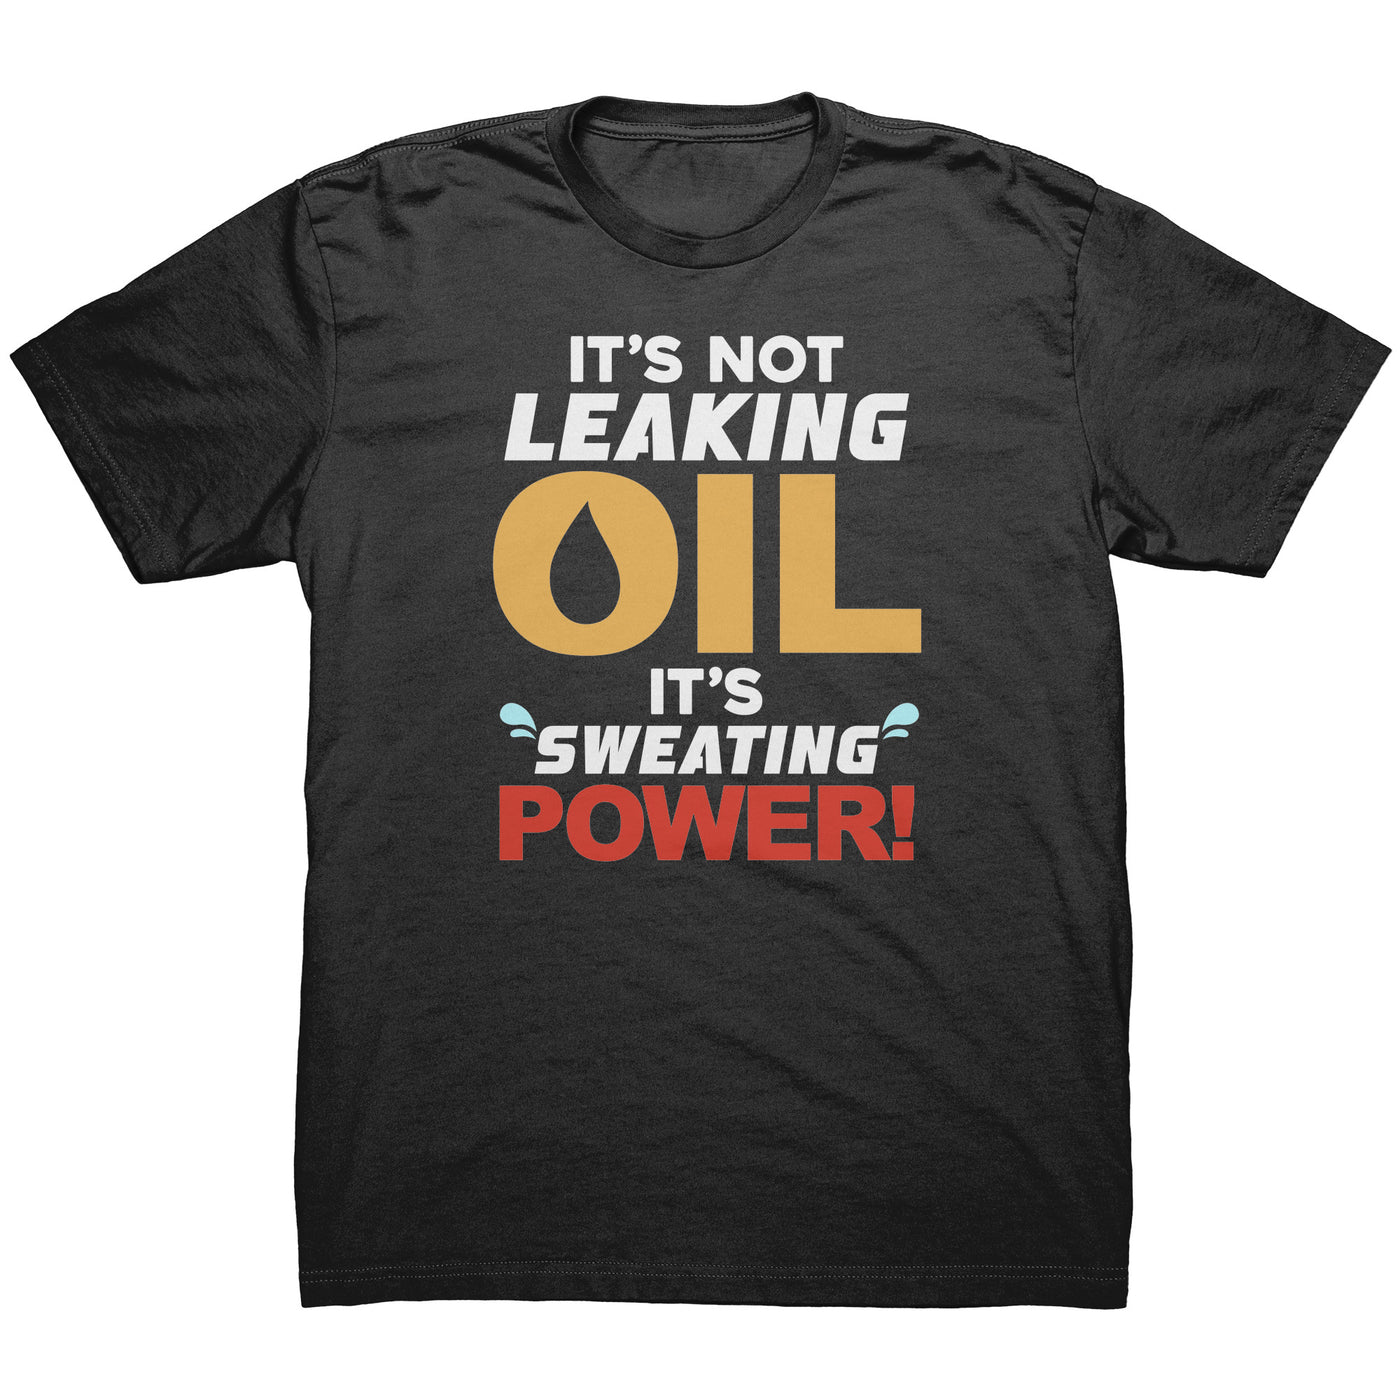 It's Not Leaking Oil, It's Sweating Power Shirt